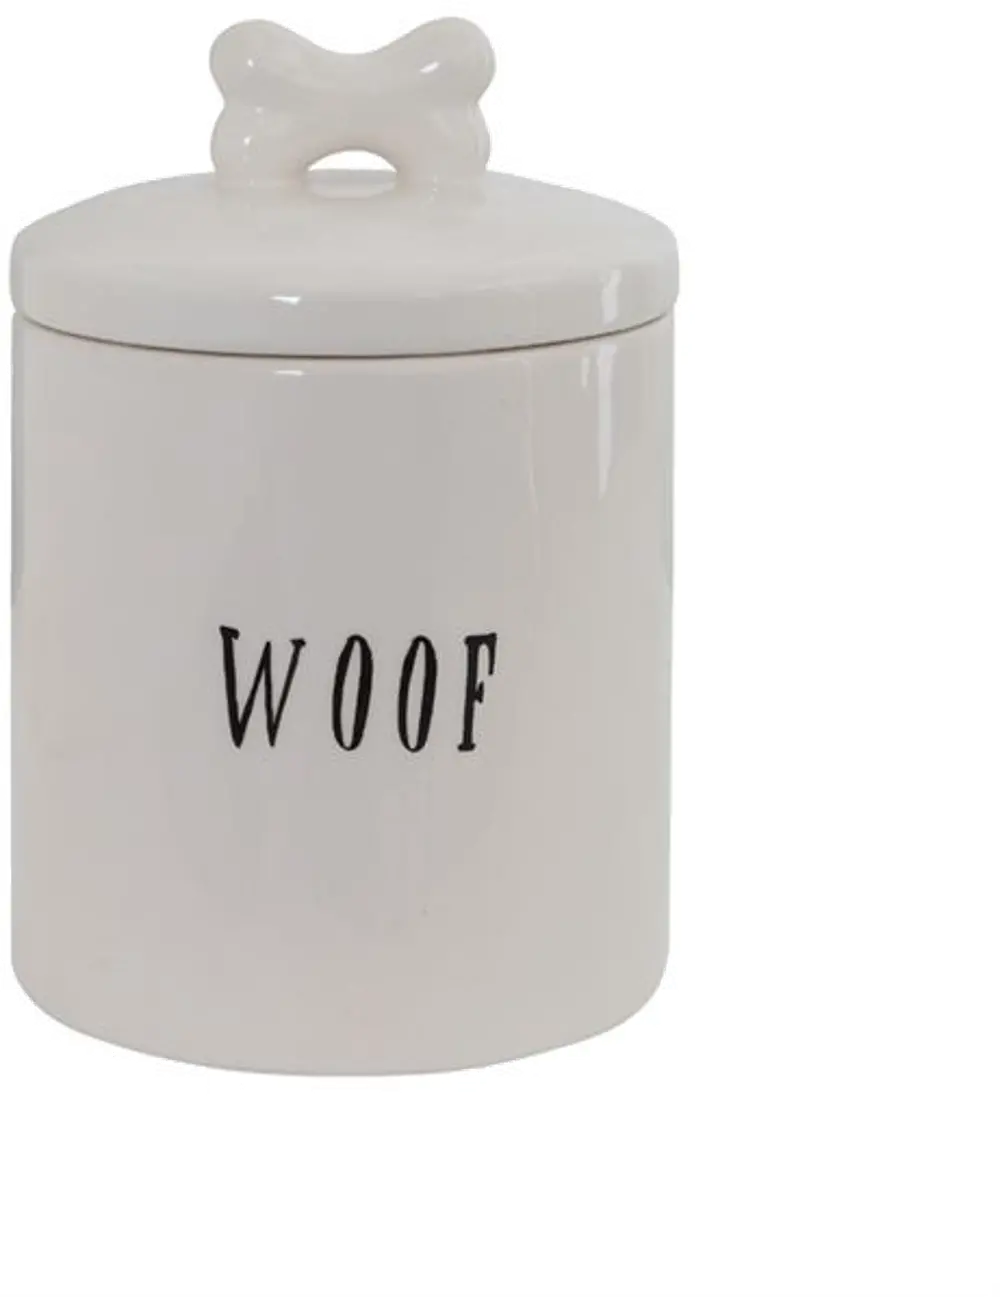 DA5576/WOOFJARBONE 8 Inch White Woof Ceramic Lidded Jar with Bone Topper-1